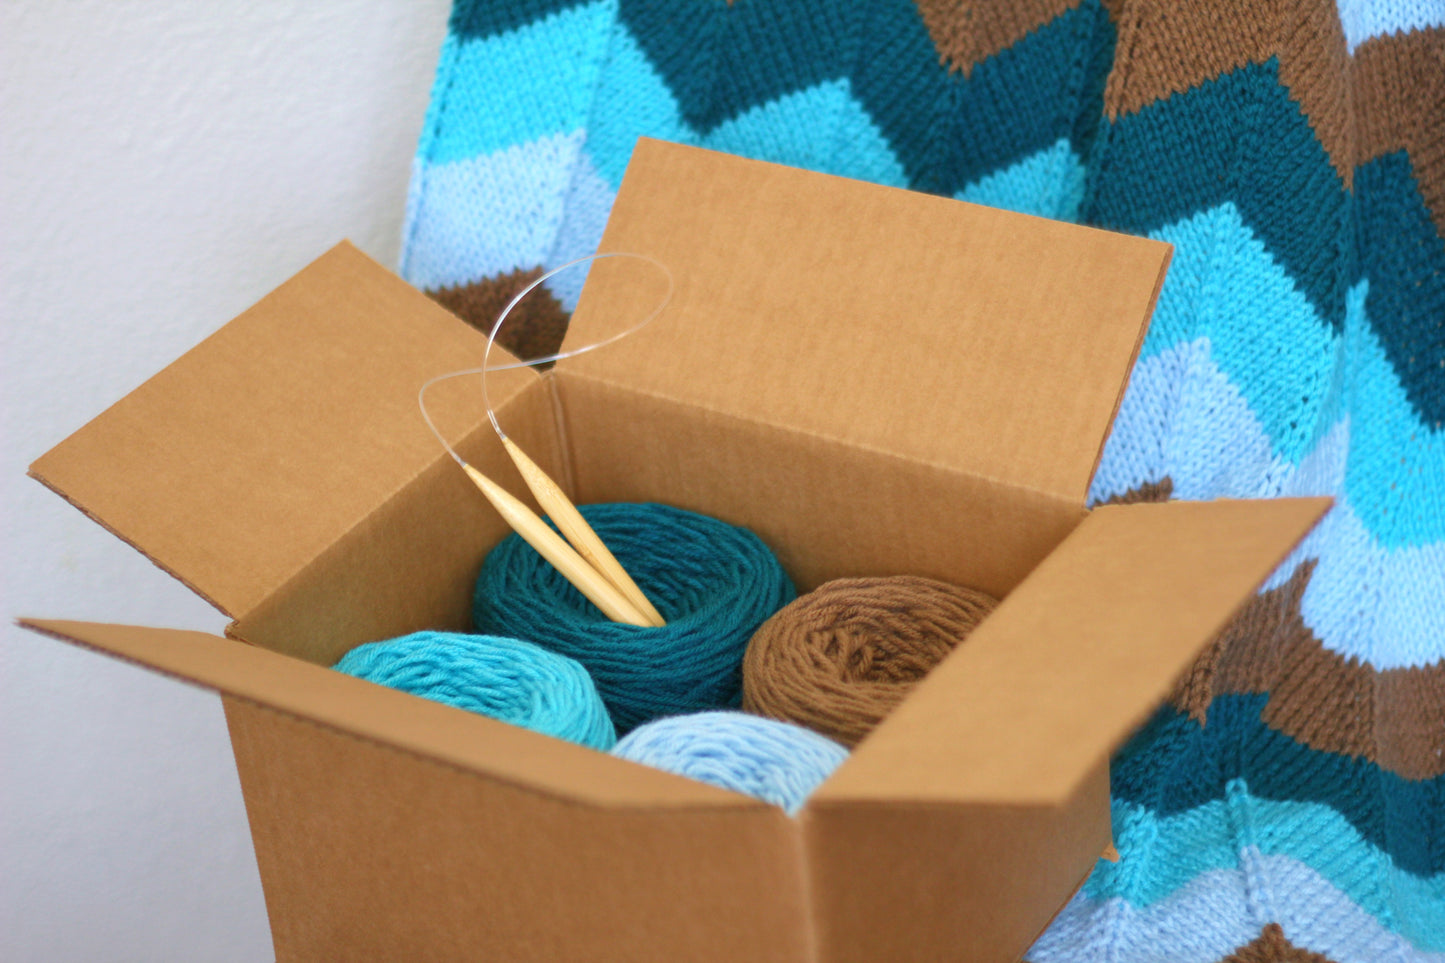 DIY Knitting kit - knit baby blanket in chevron pattern, newborn blanket, baby shower gift